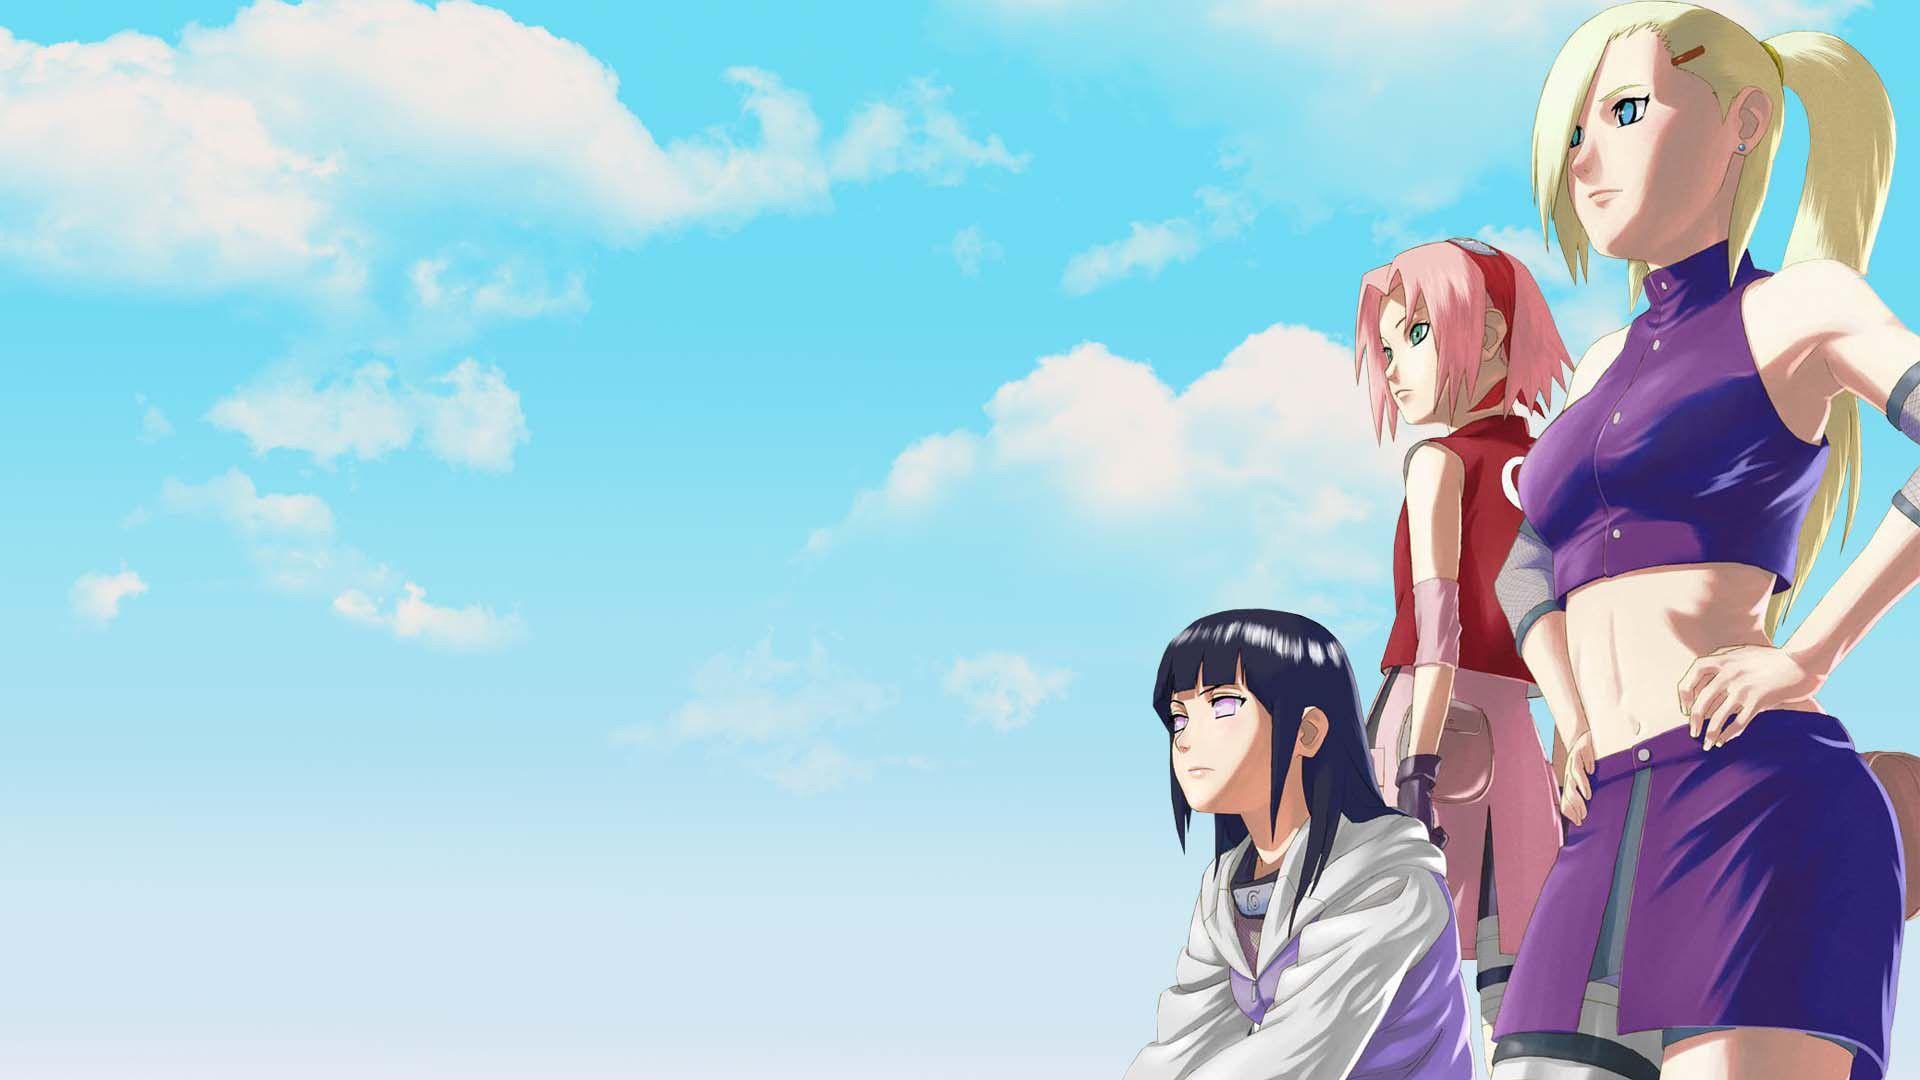 Naruto. Full HD Wallpaper, download 1080p desktop background